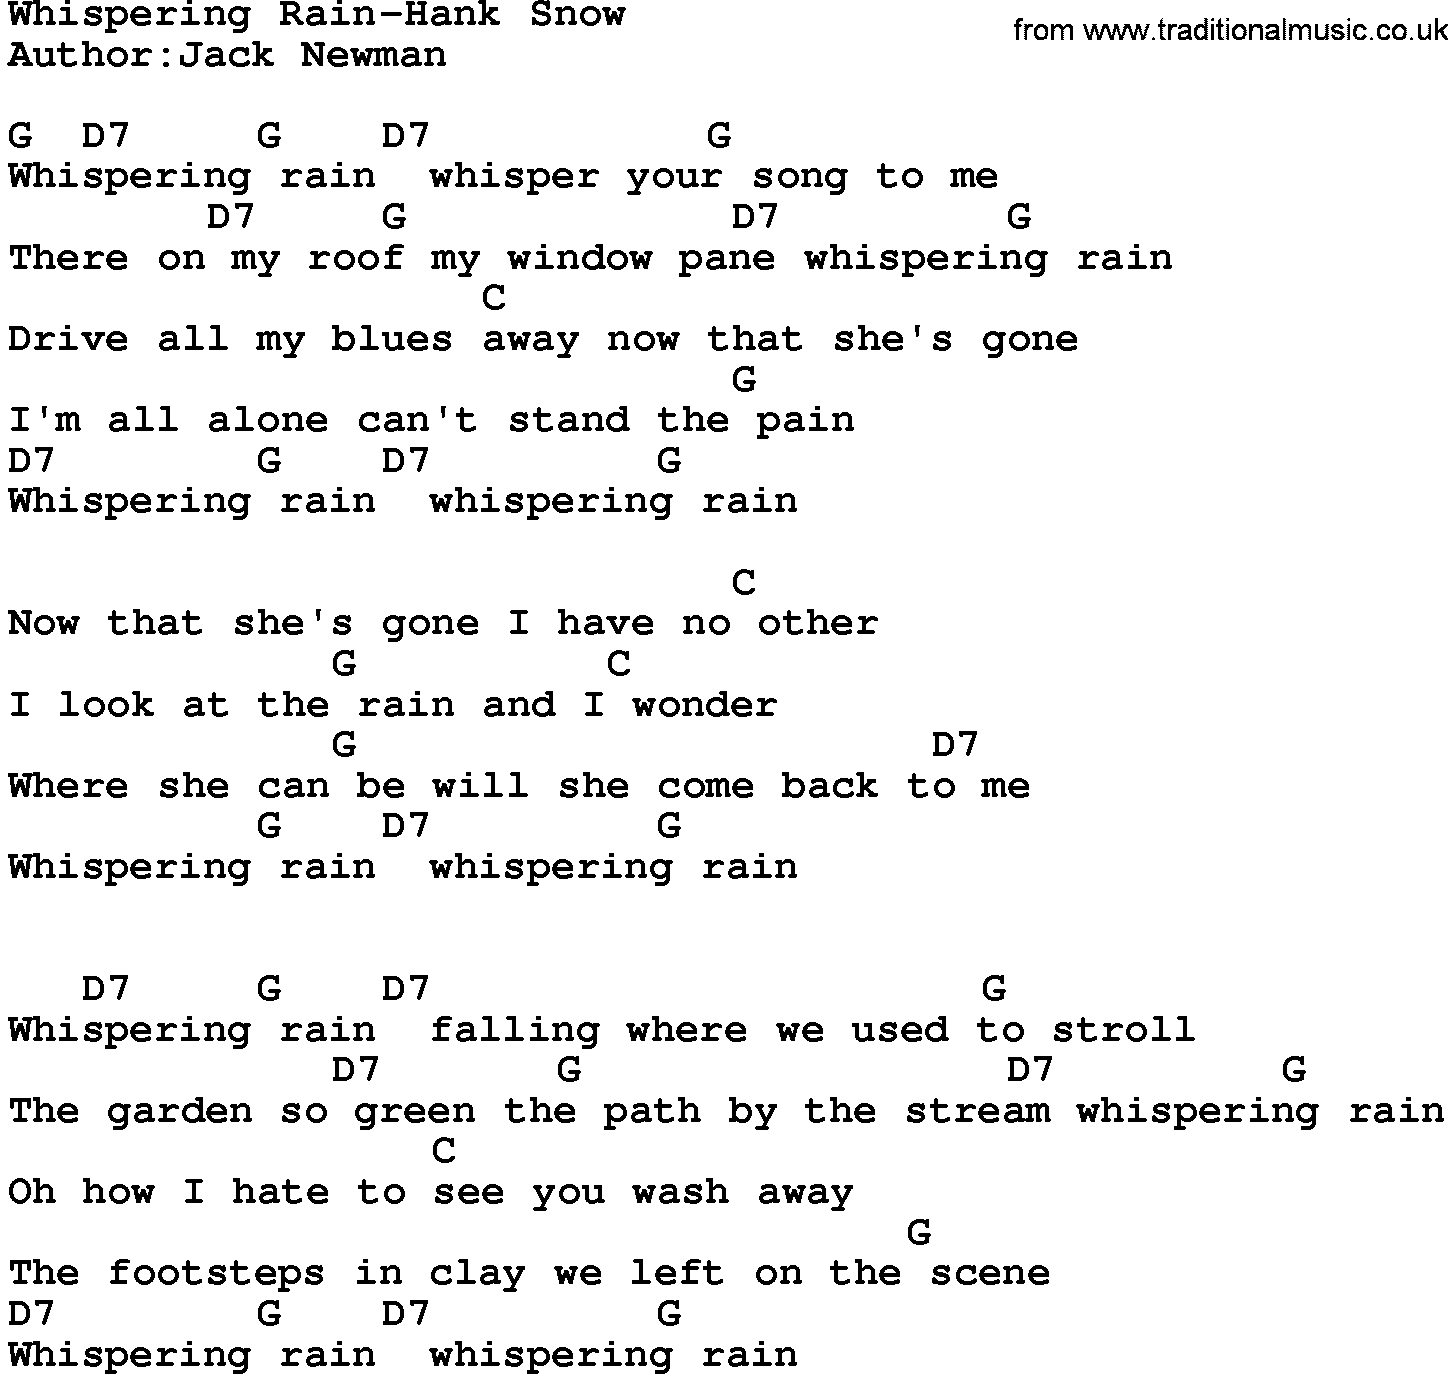 Country music song: Whispering Rain-Hank Snow lyrics and chords